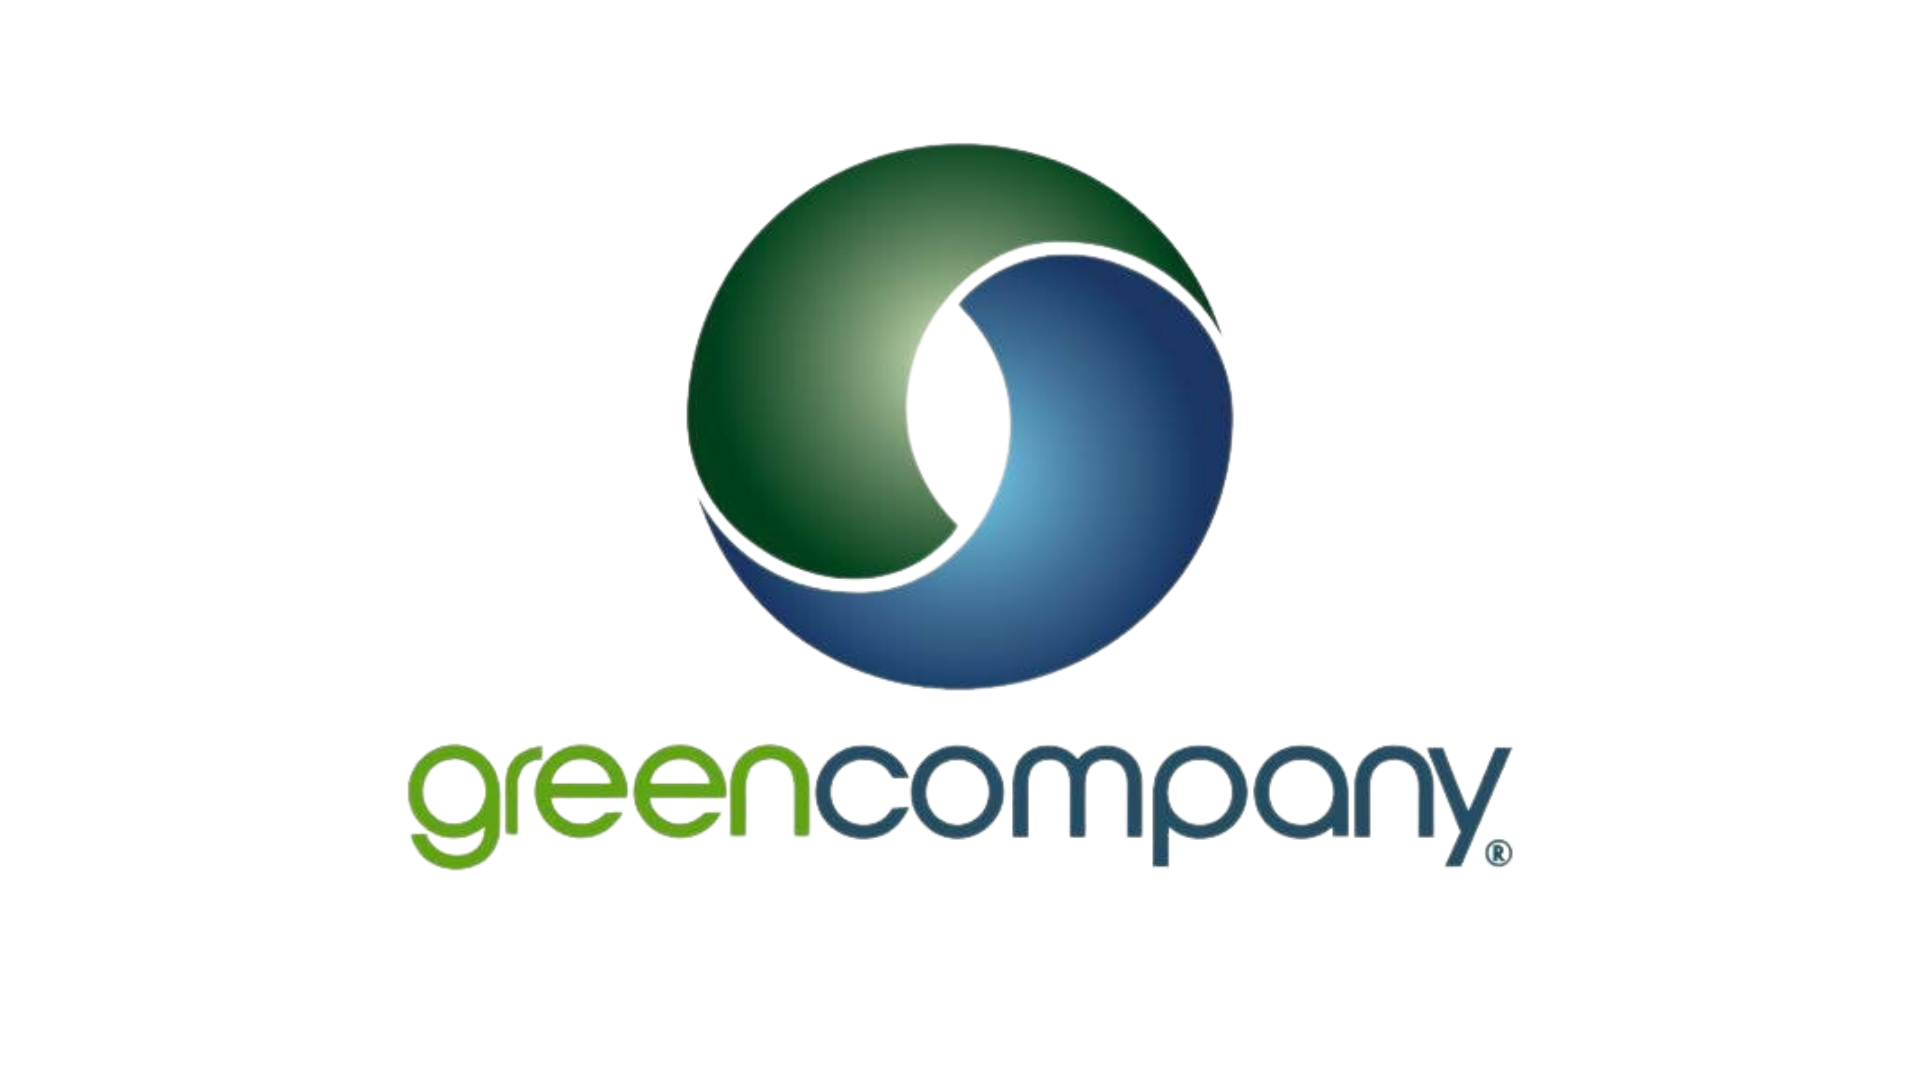 Green Company - Relaciones Institucionales IMAA (2)